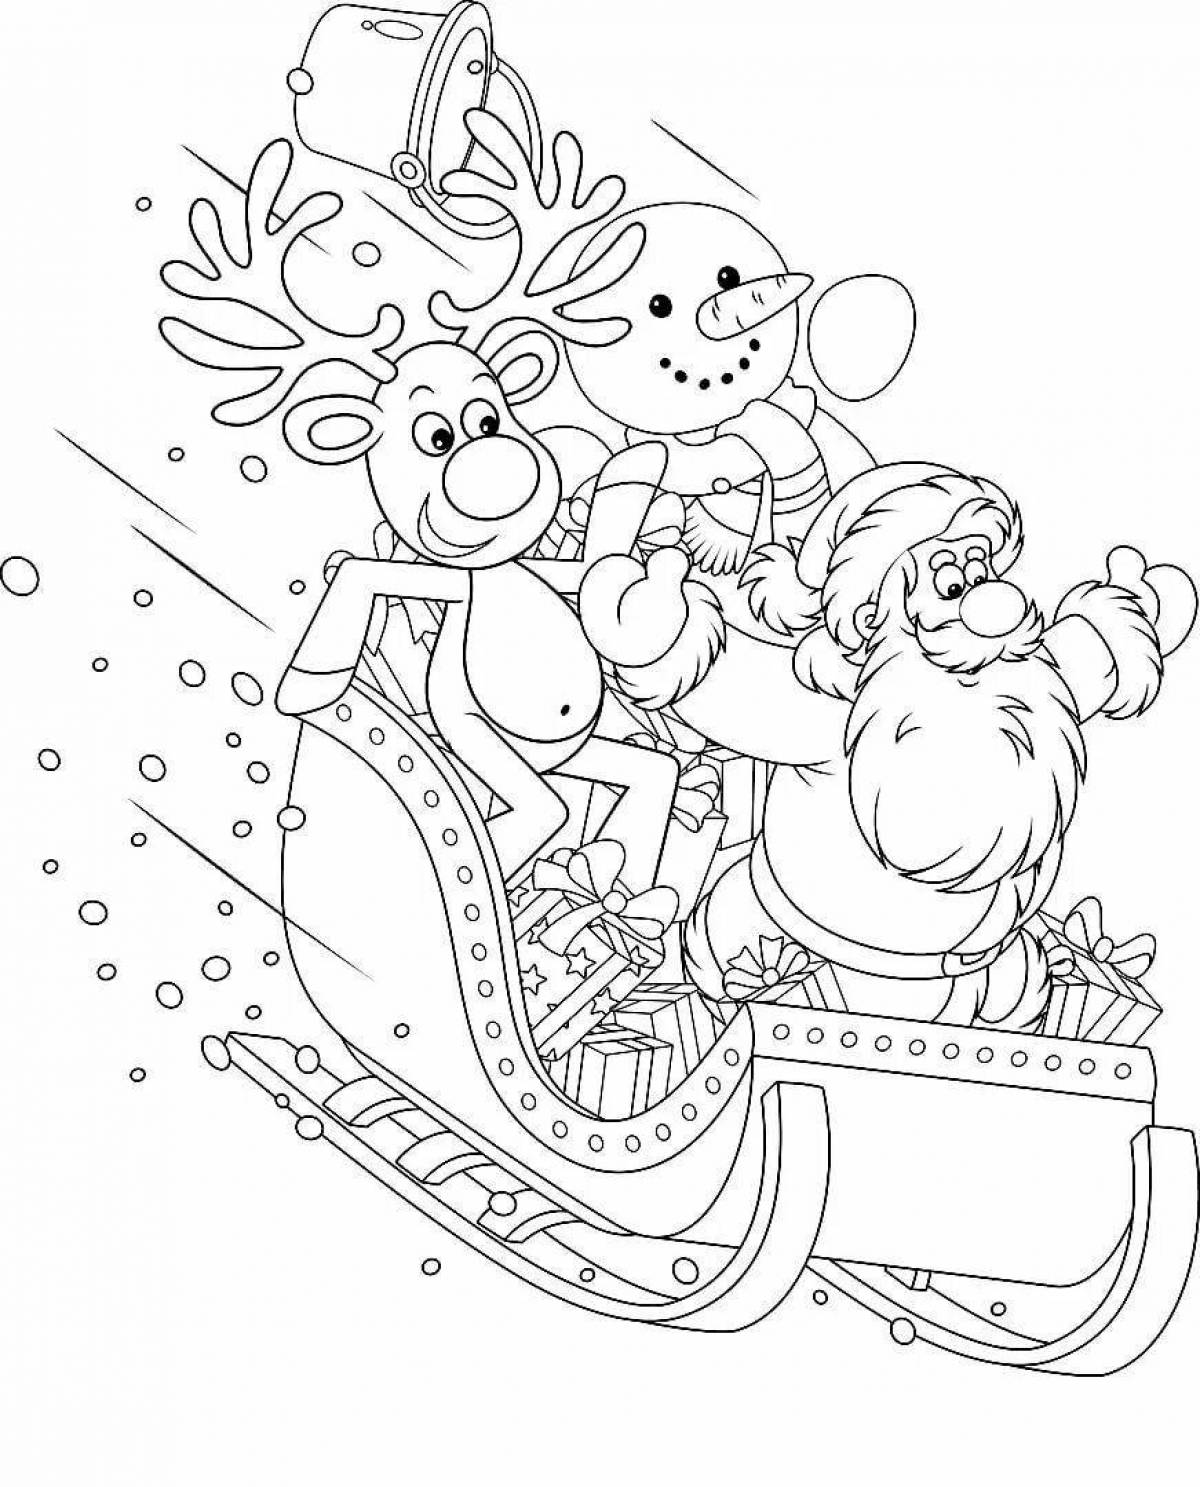 Santa Claus on a sled #1